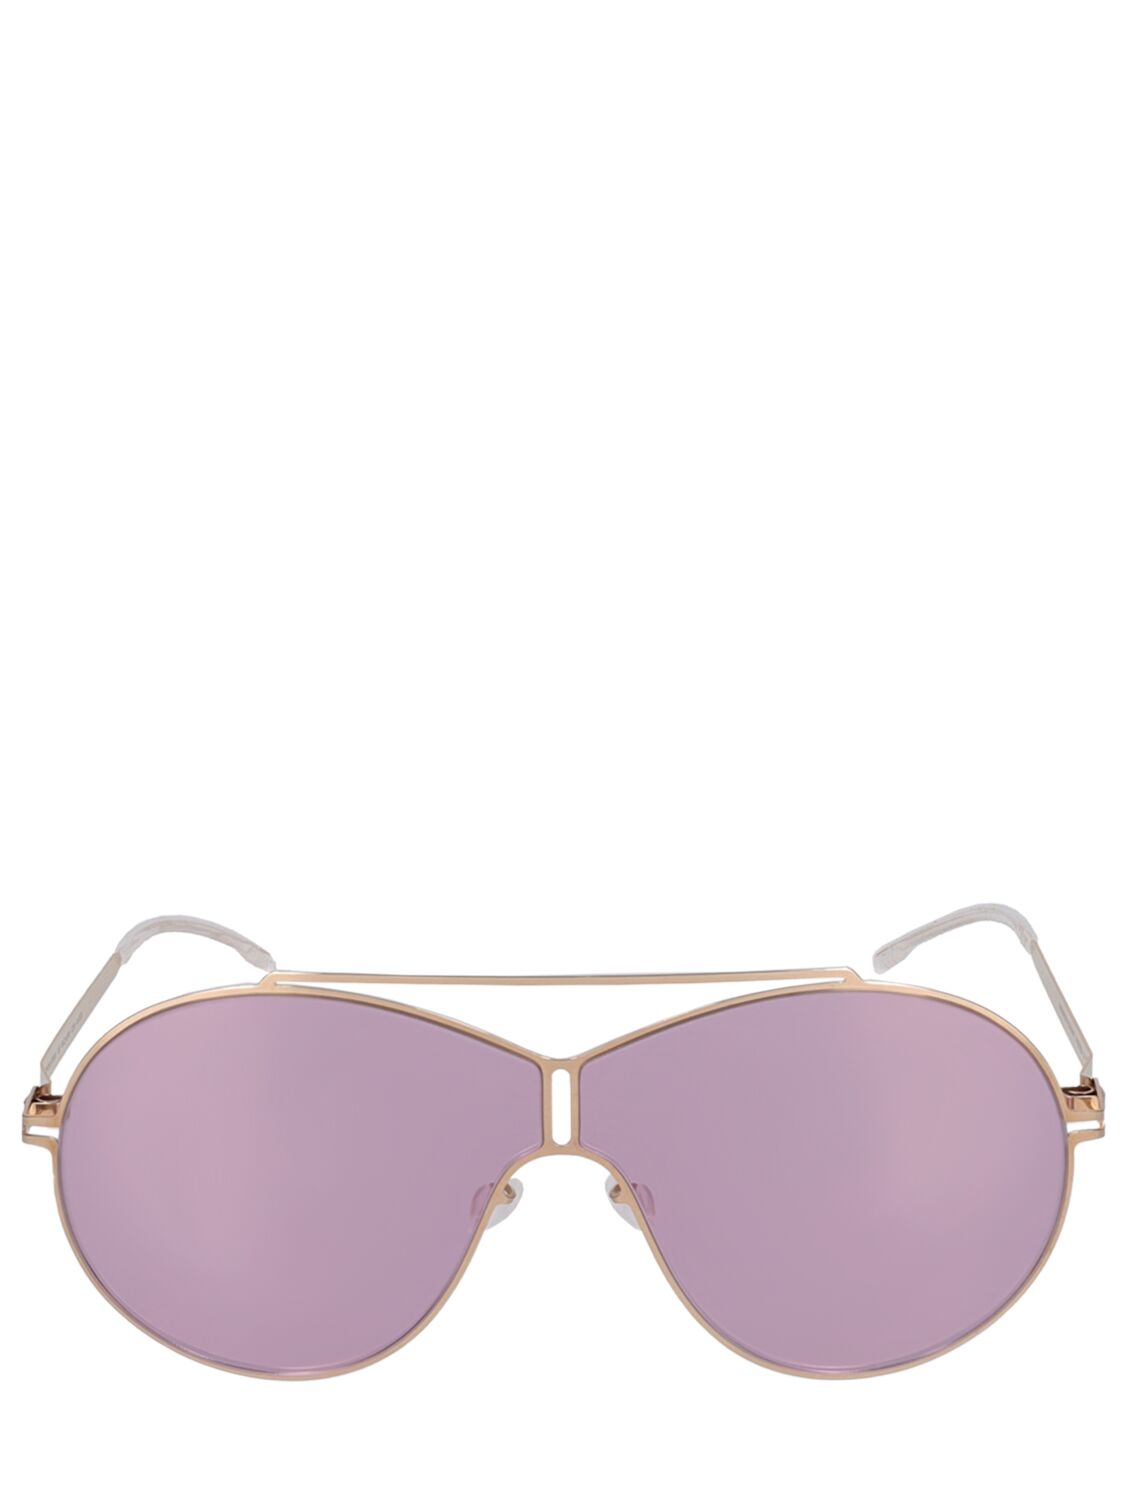 Mykita Studio 12.5 Sunglasses In Pink